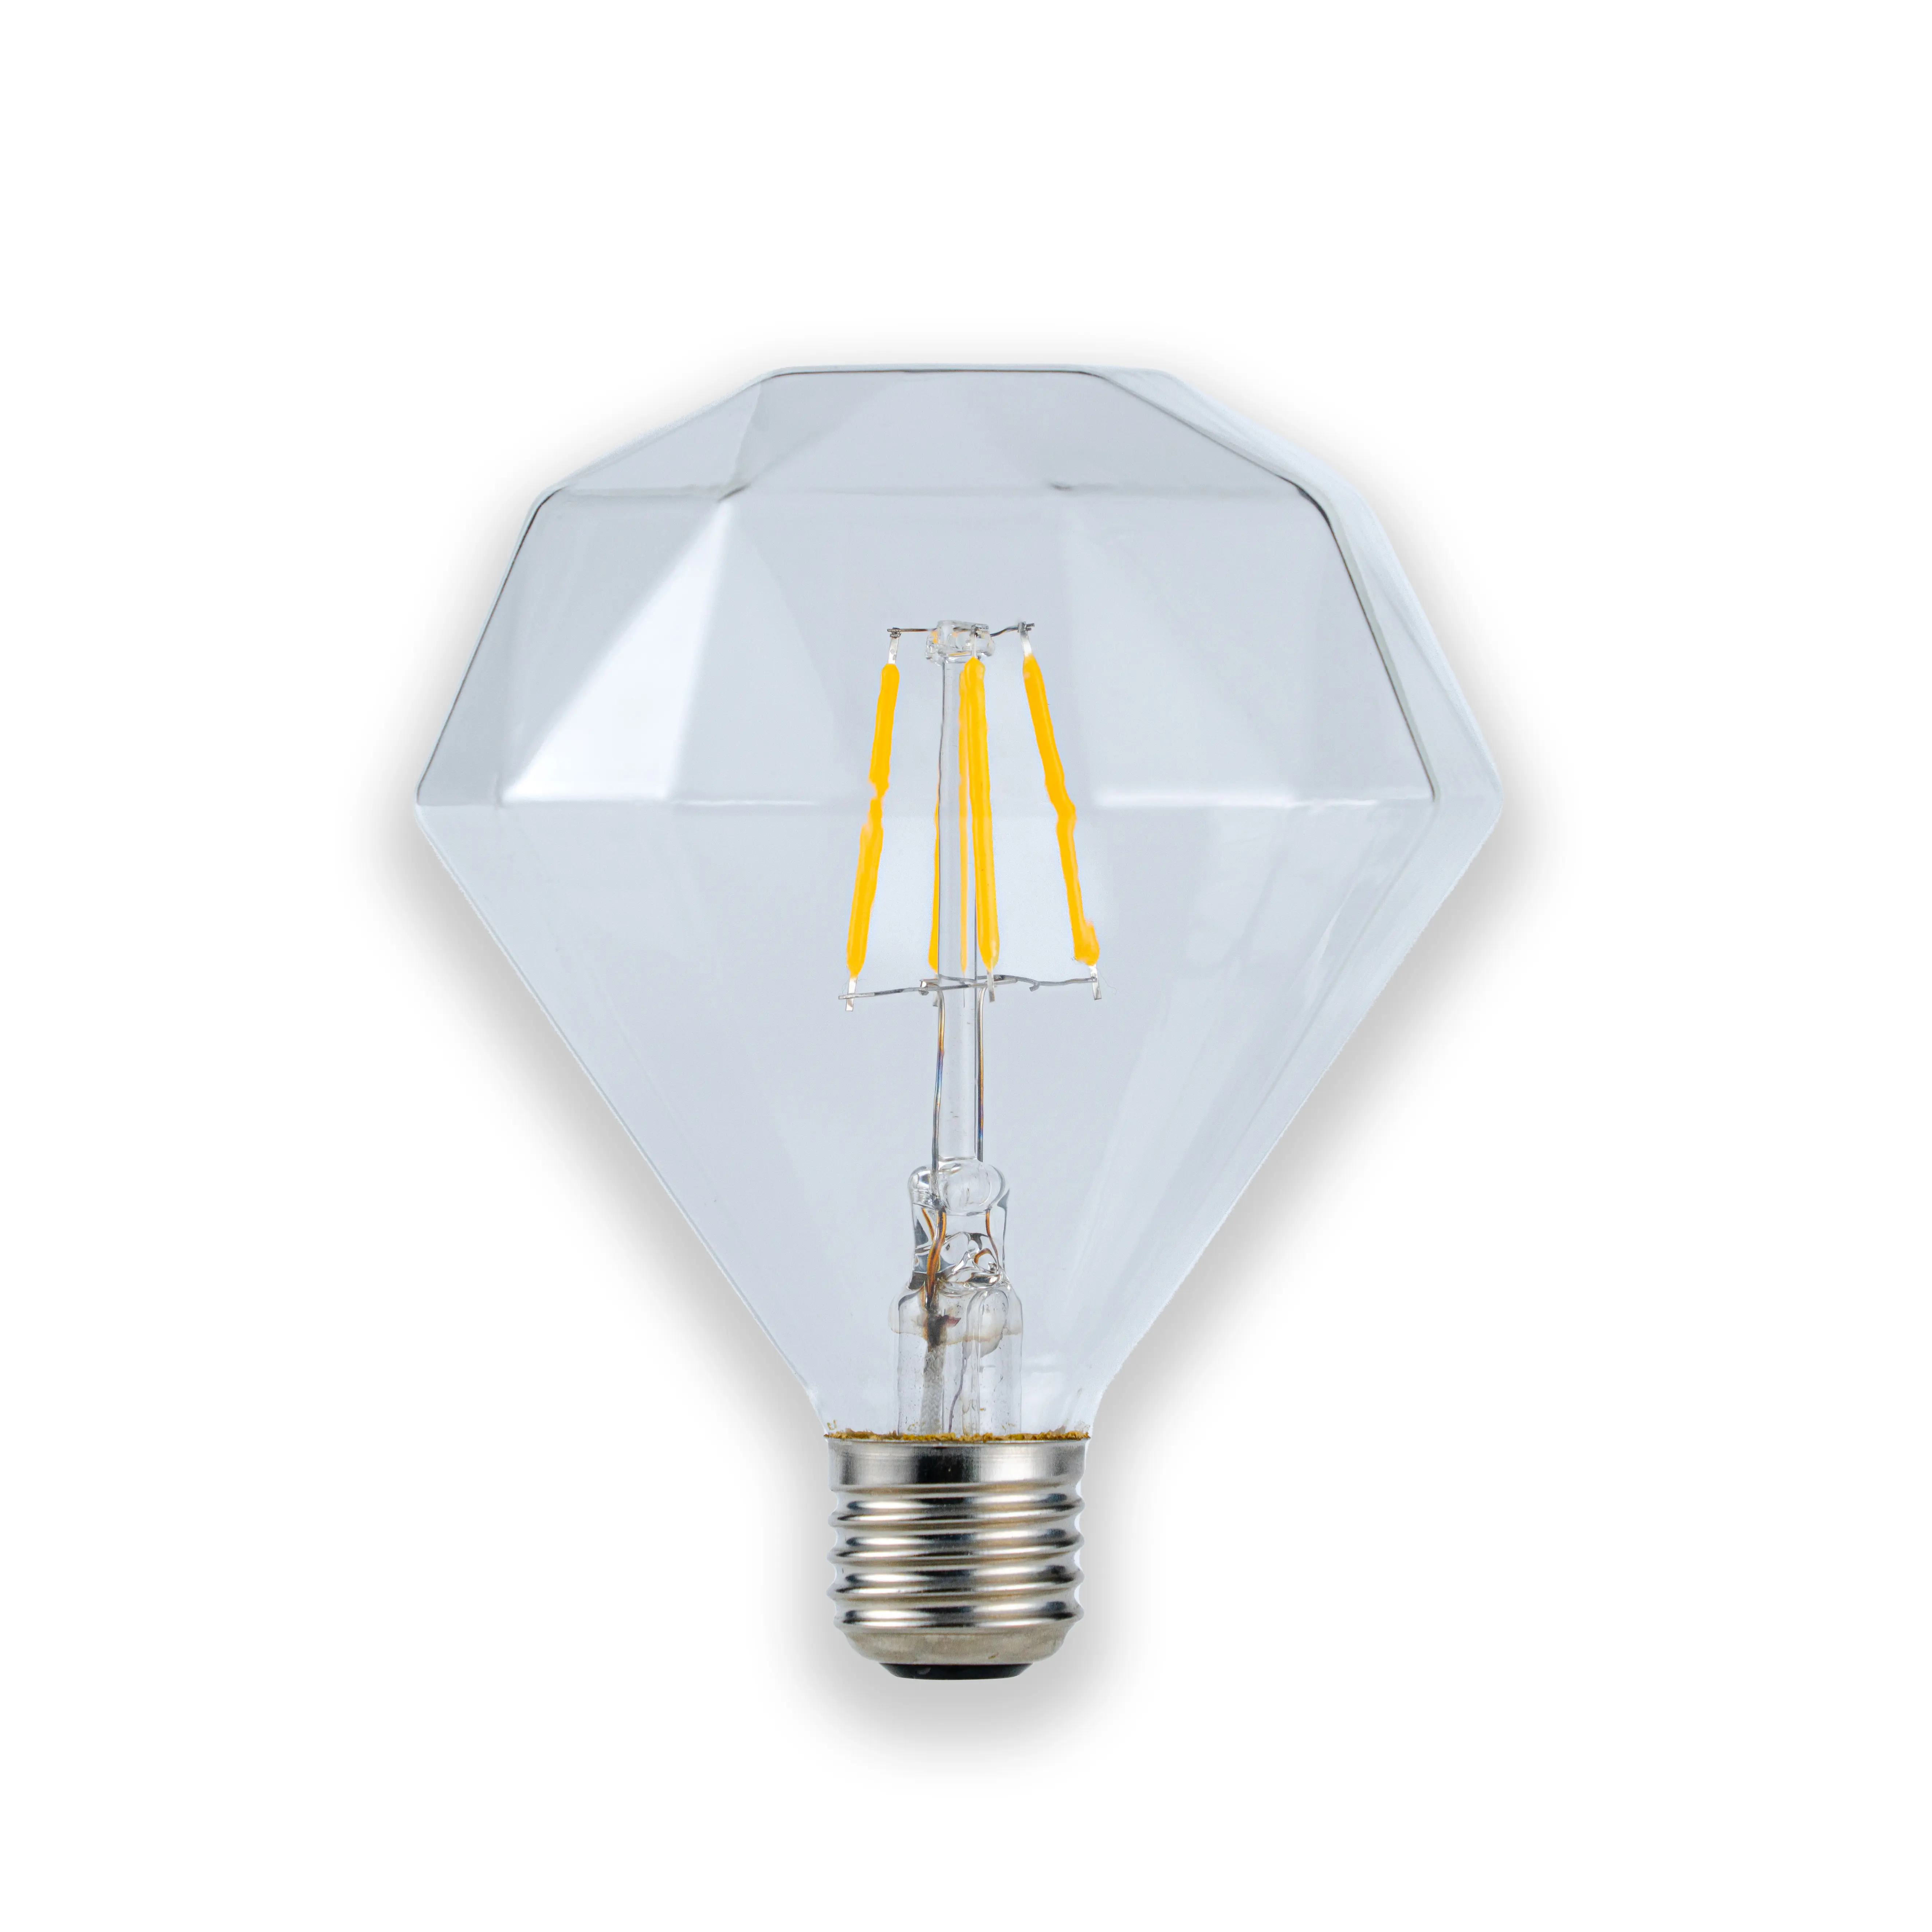 Light bulb shaped lamp